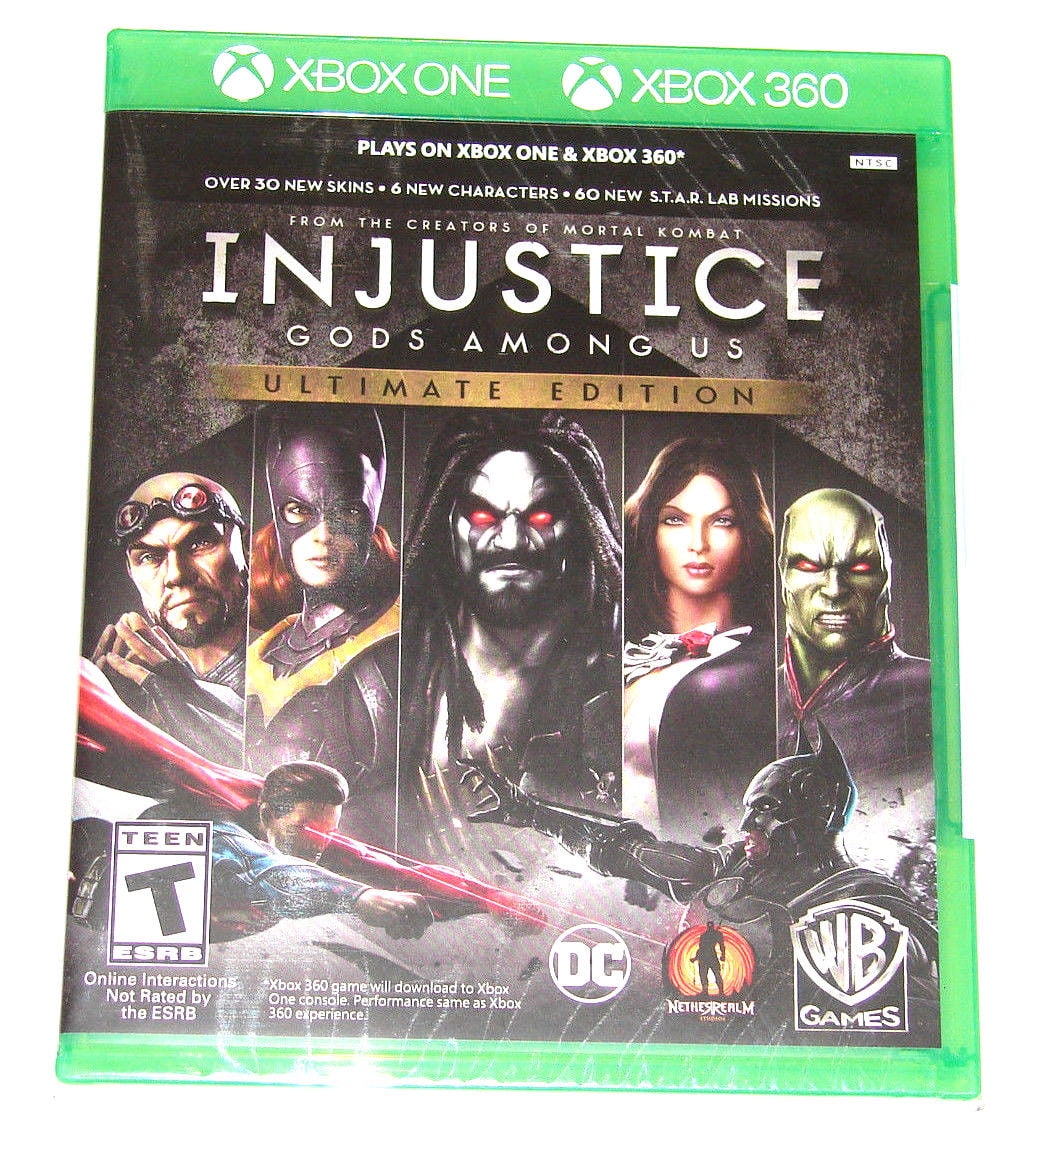 Injustice Gods Among Us - Xbox 360 (Usado)